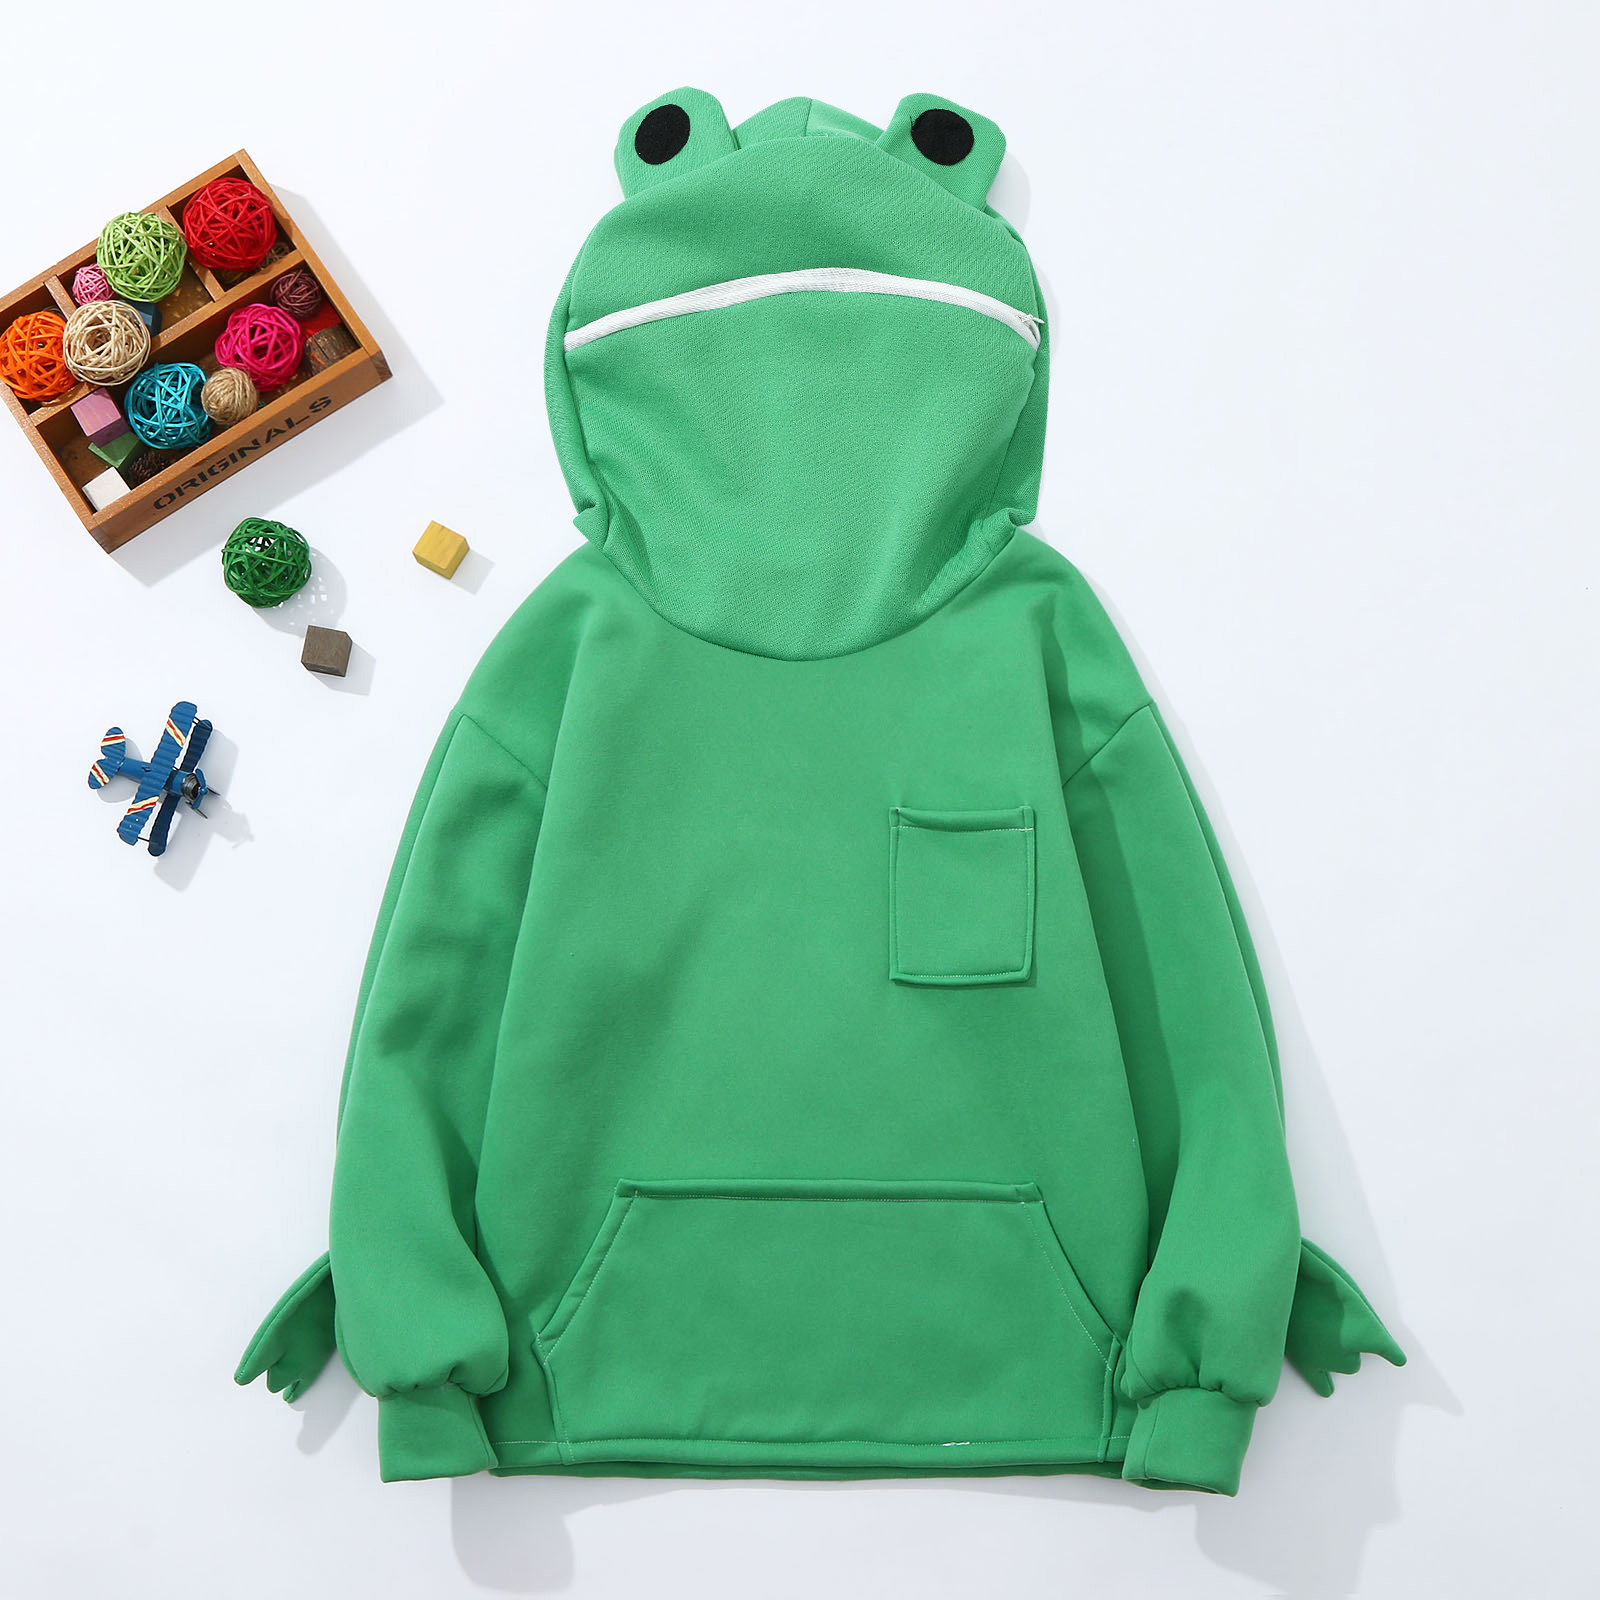 New Kids Hoodies Toddler Sweatshirts Frog Hooded Boys Girl Children Baby Girl Outfit 2020 Autumn Children Zipper T-shirt#G30